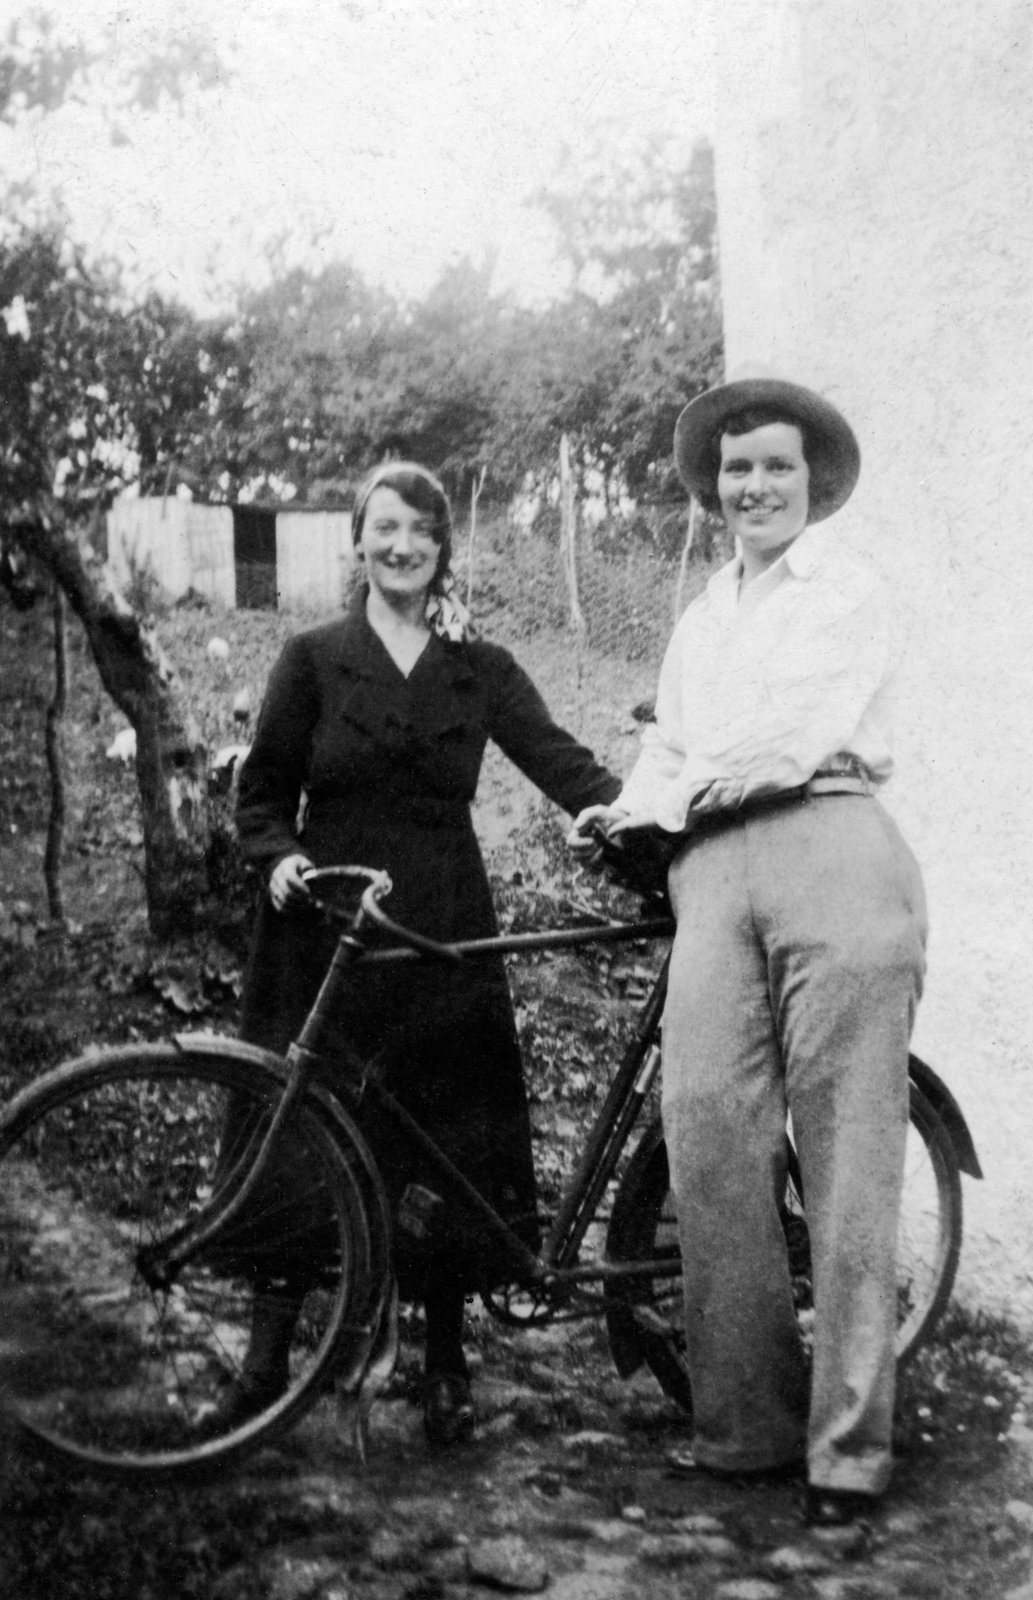 Two of the ‘Shoemaker’ McKenna sisters, Mary (McKenna) Murray and Eva (McKenna) Clerkin c. 1940.